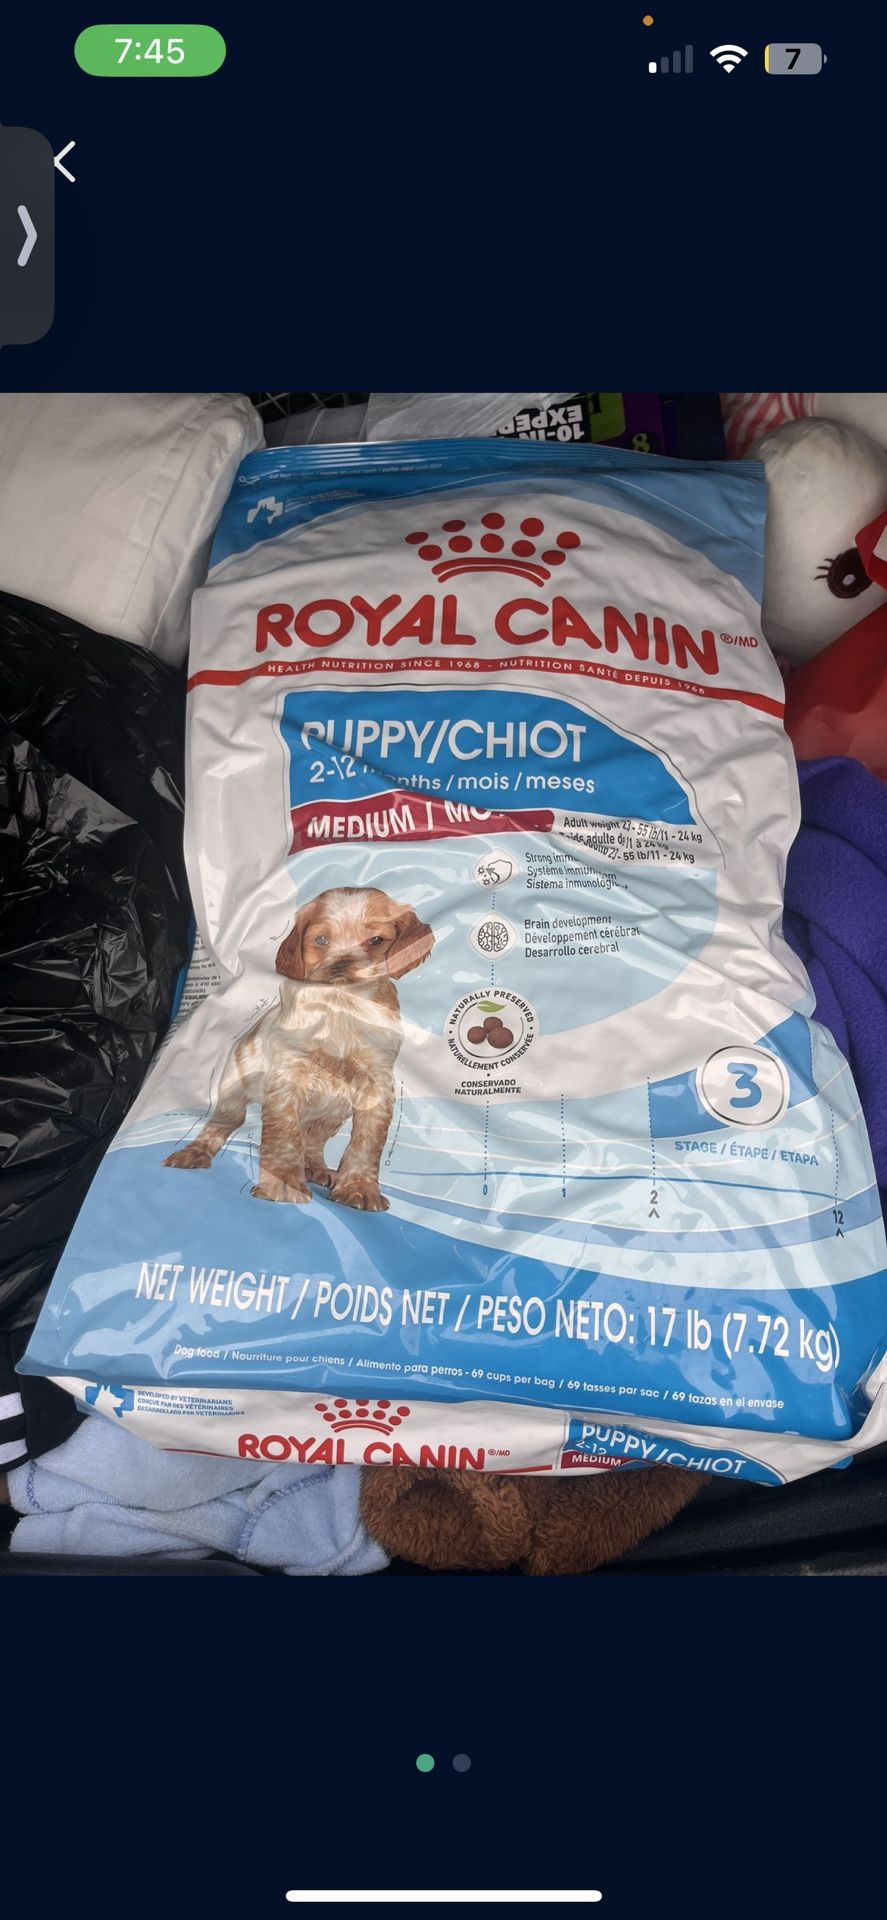 Royal Canine Dog Food 